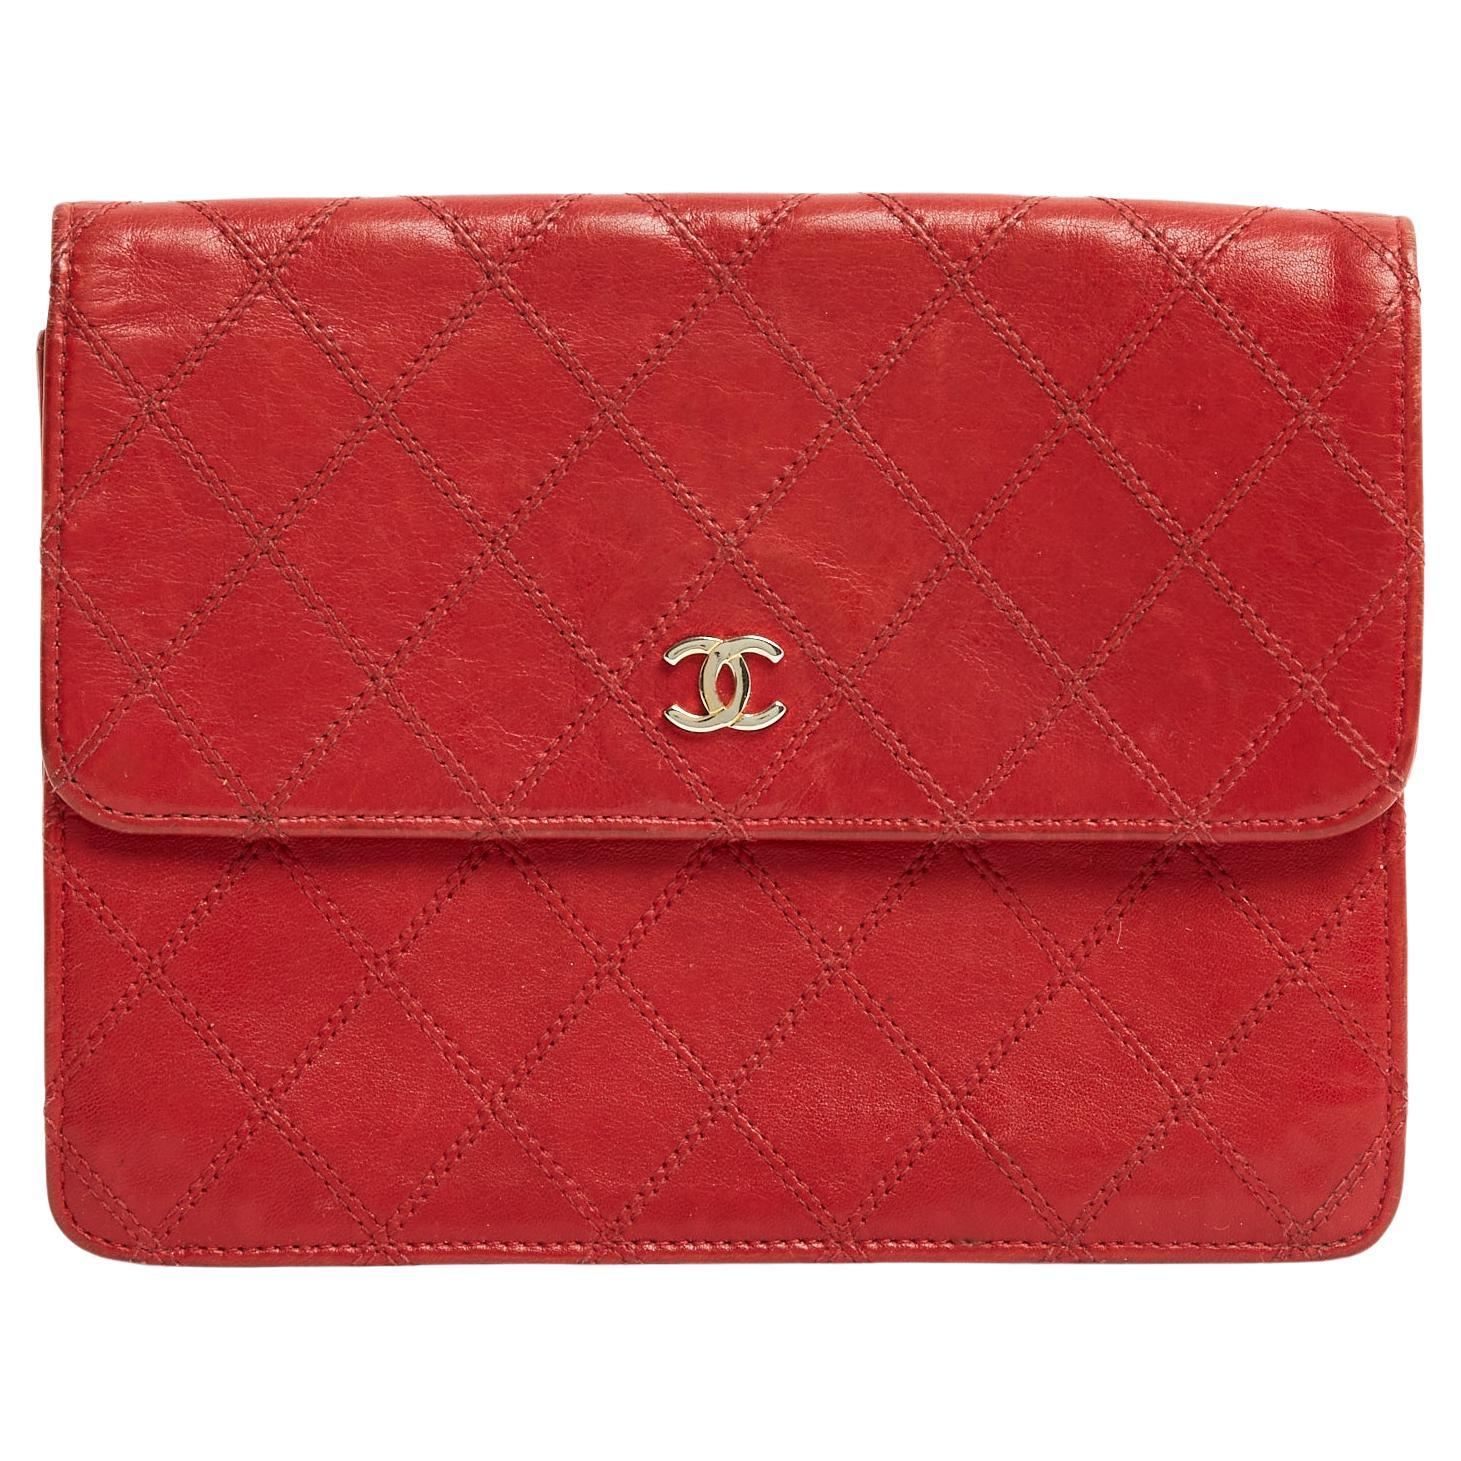 Chanel Burgundy Wallet - 9 For Sale on 1stDibs  chanel wallet burgundy,  chanel burgundy wallet on chain